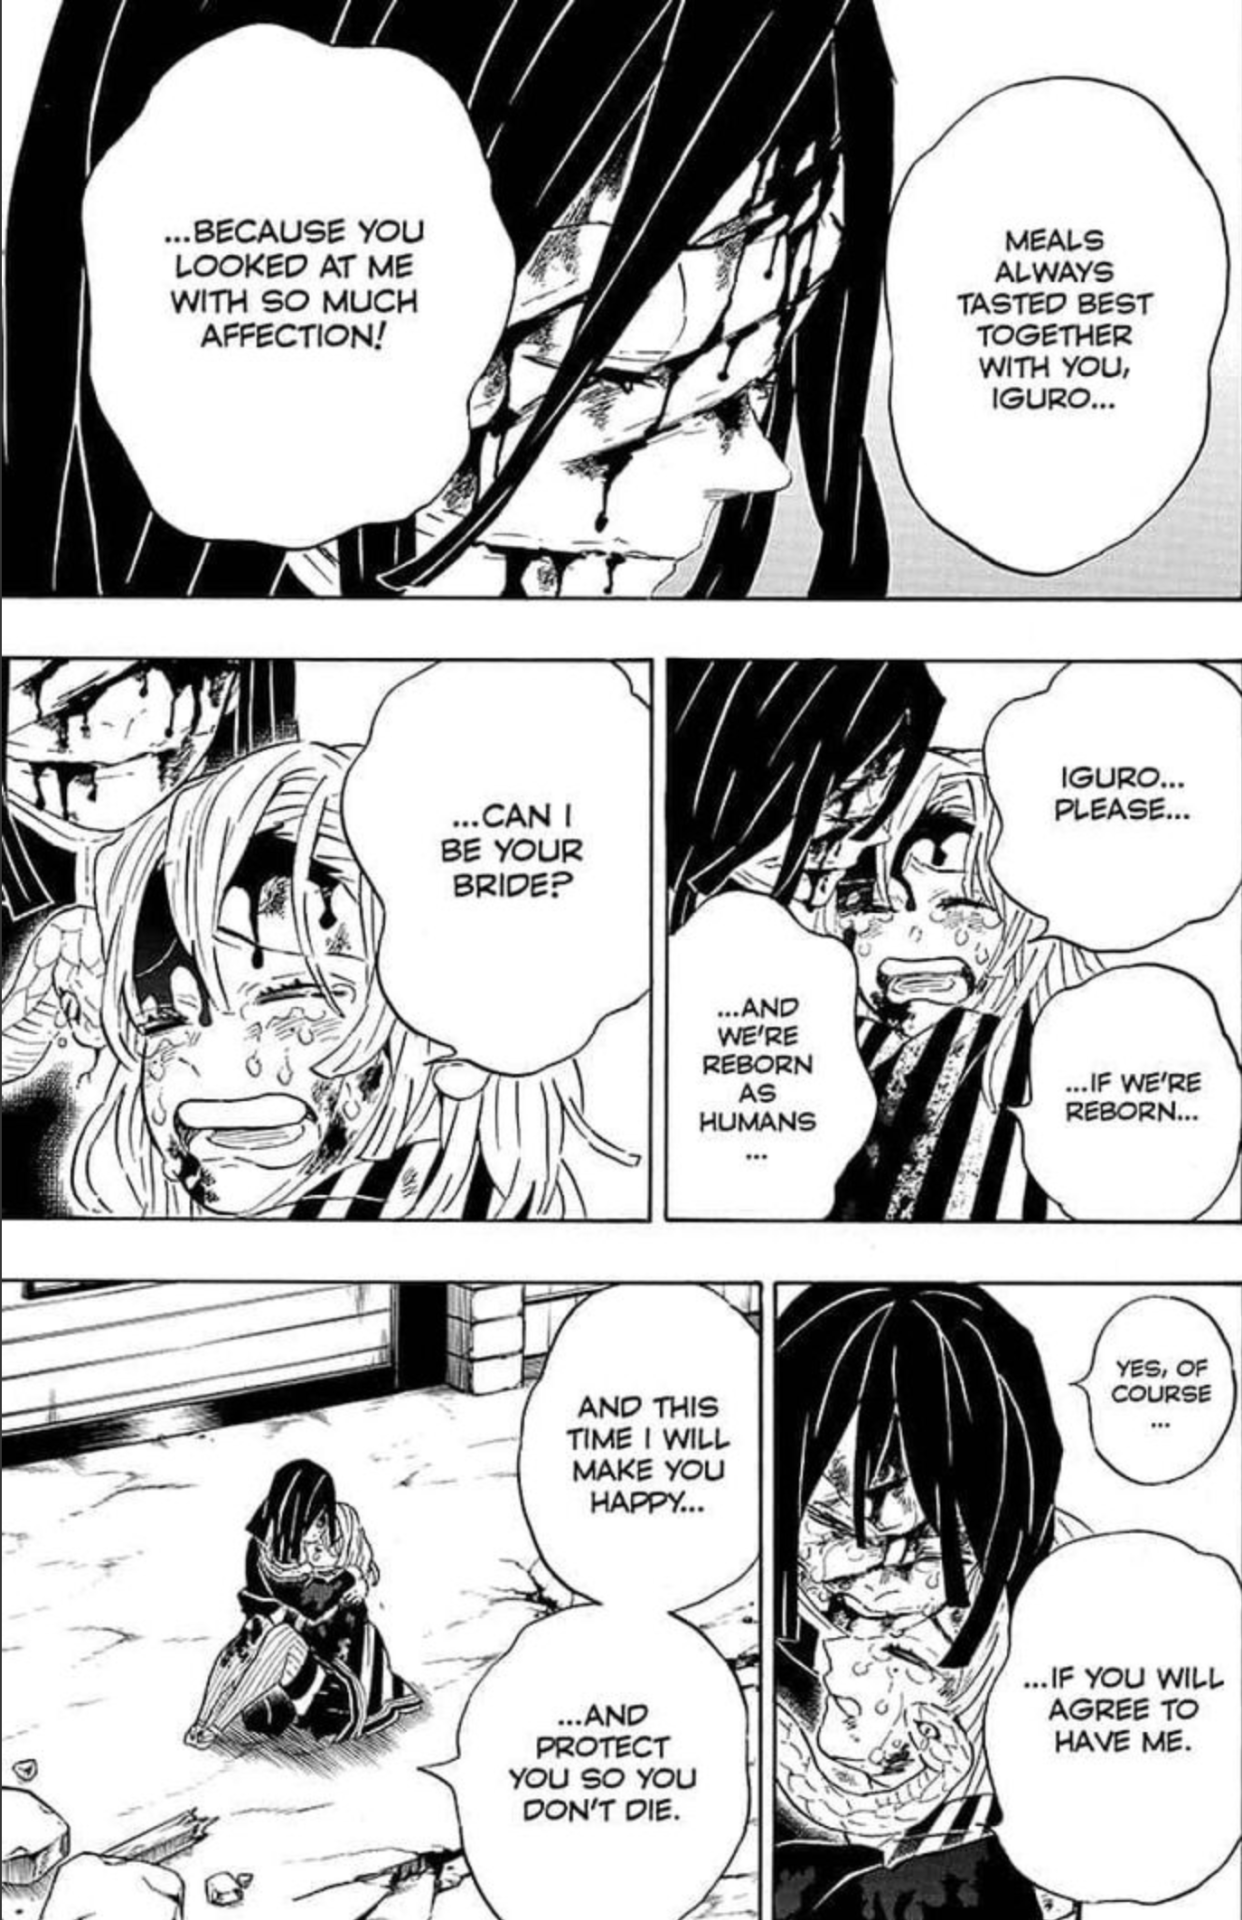 Mitsuri and Obanai's relationship 